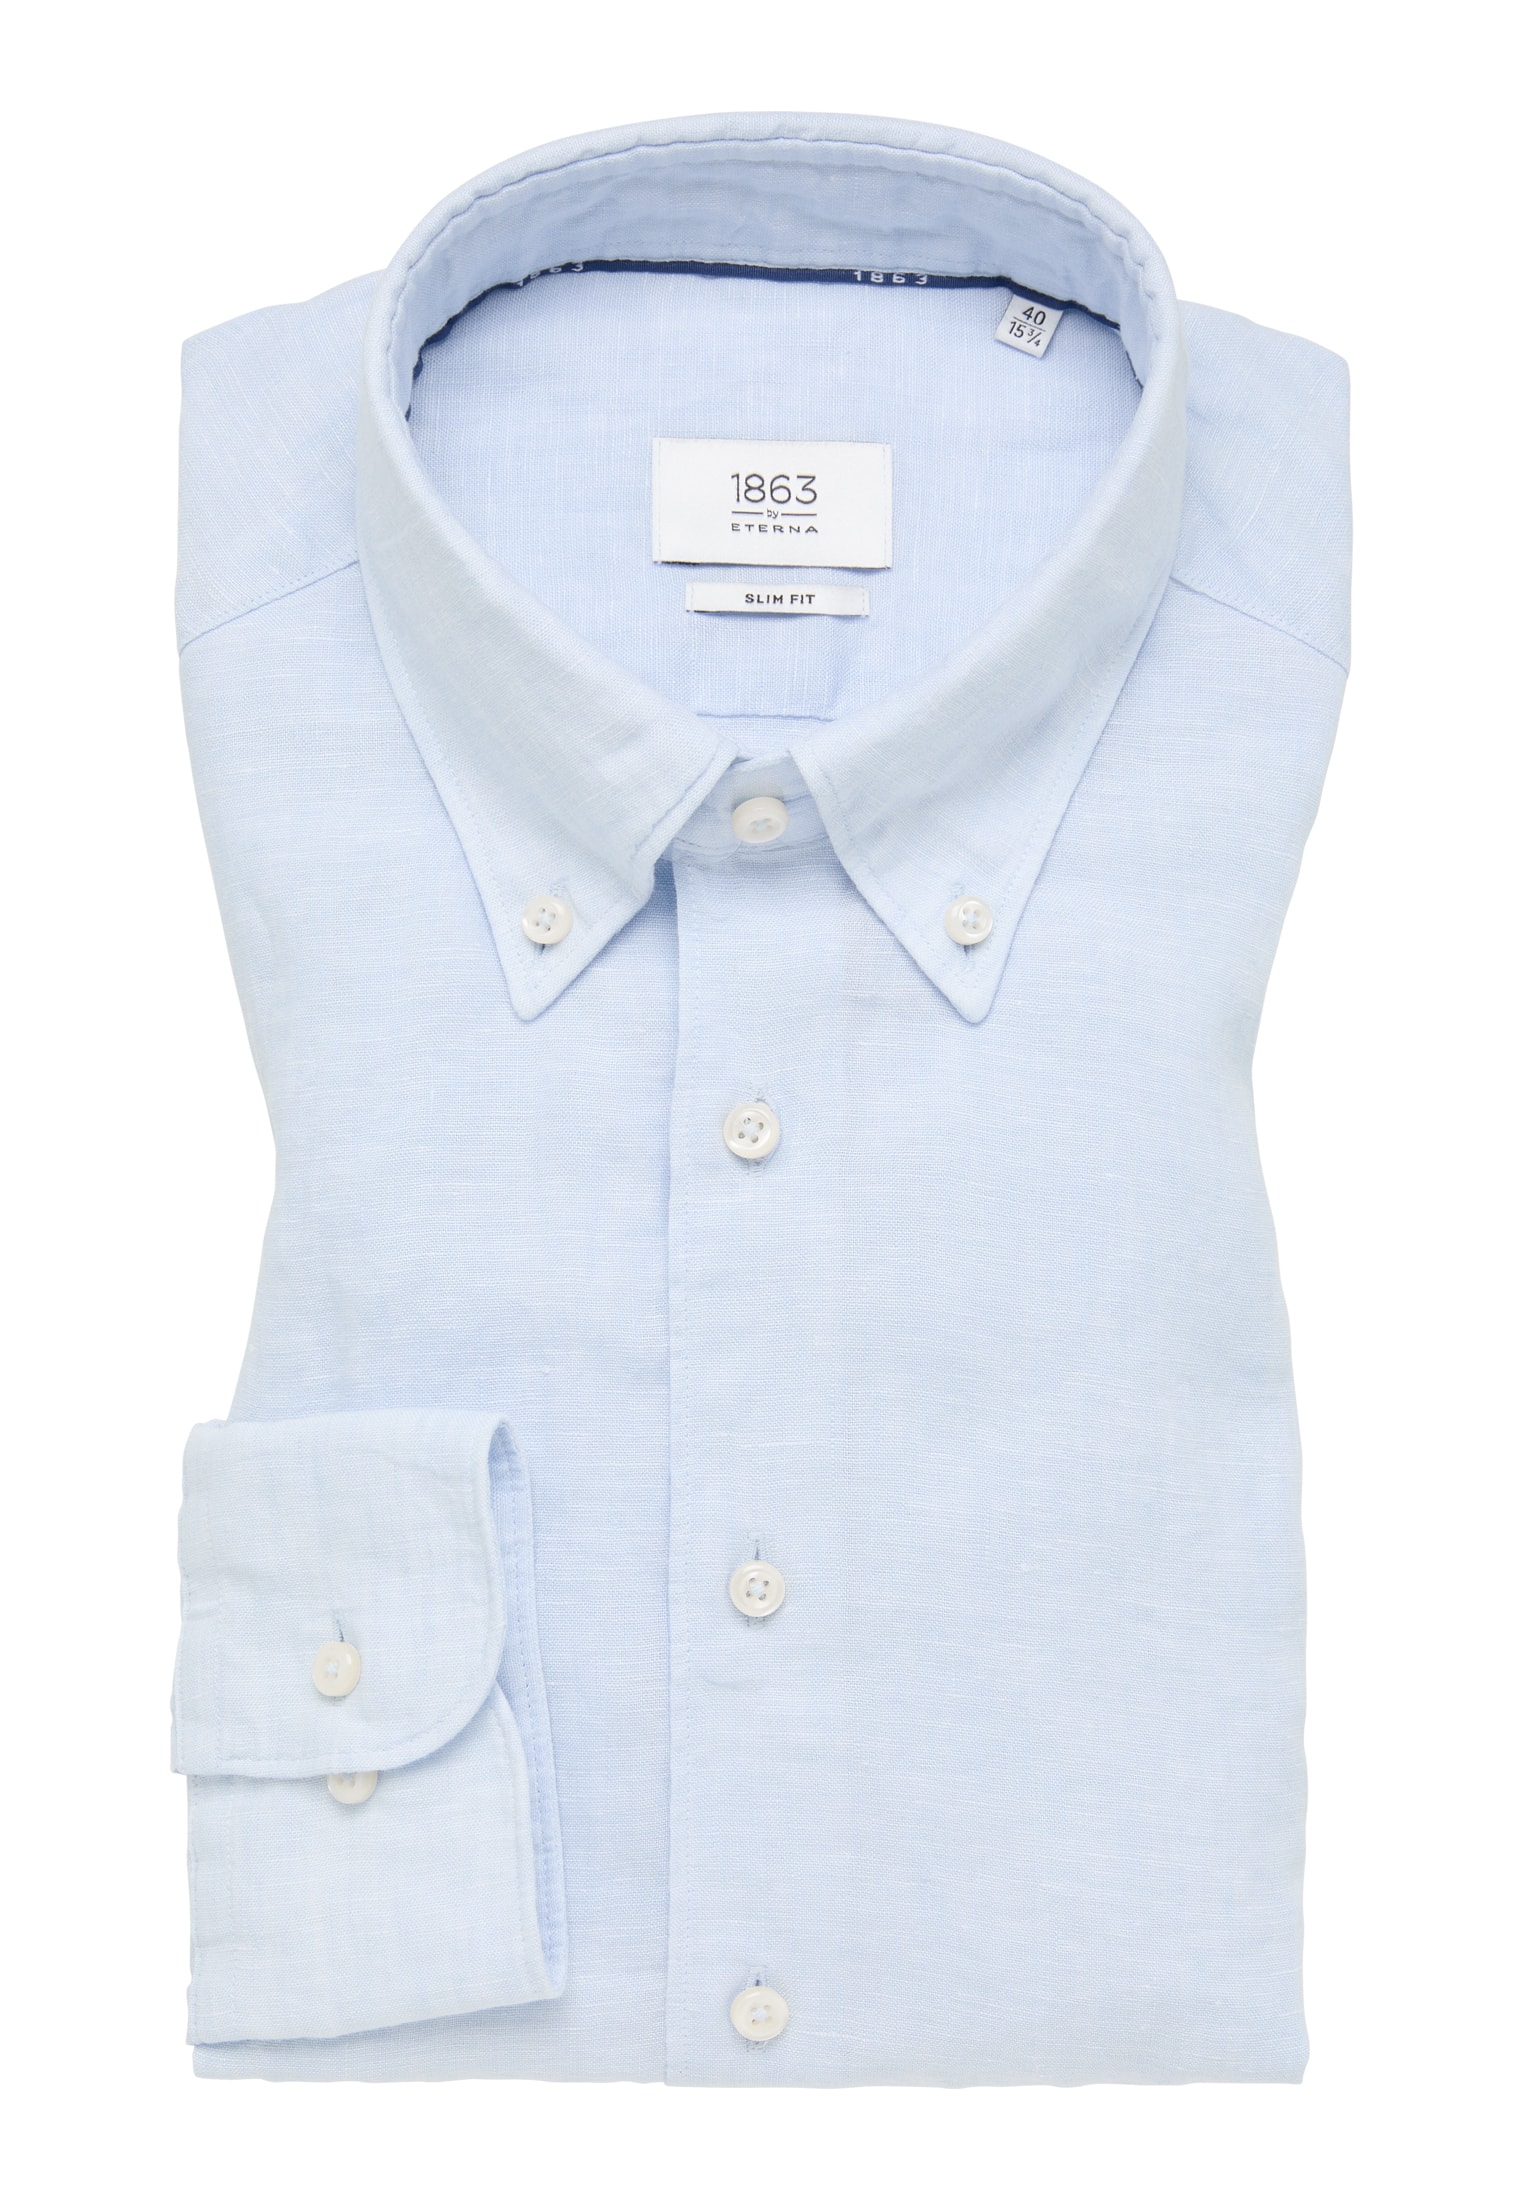 SLIM FIT | Shirt light | in | blue light plain 1SH11907-01-11-40-1/1 long sleeve 40 | blue